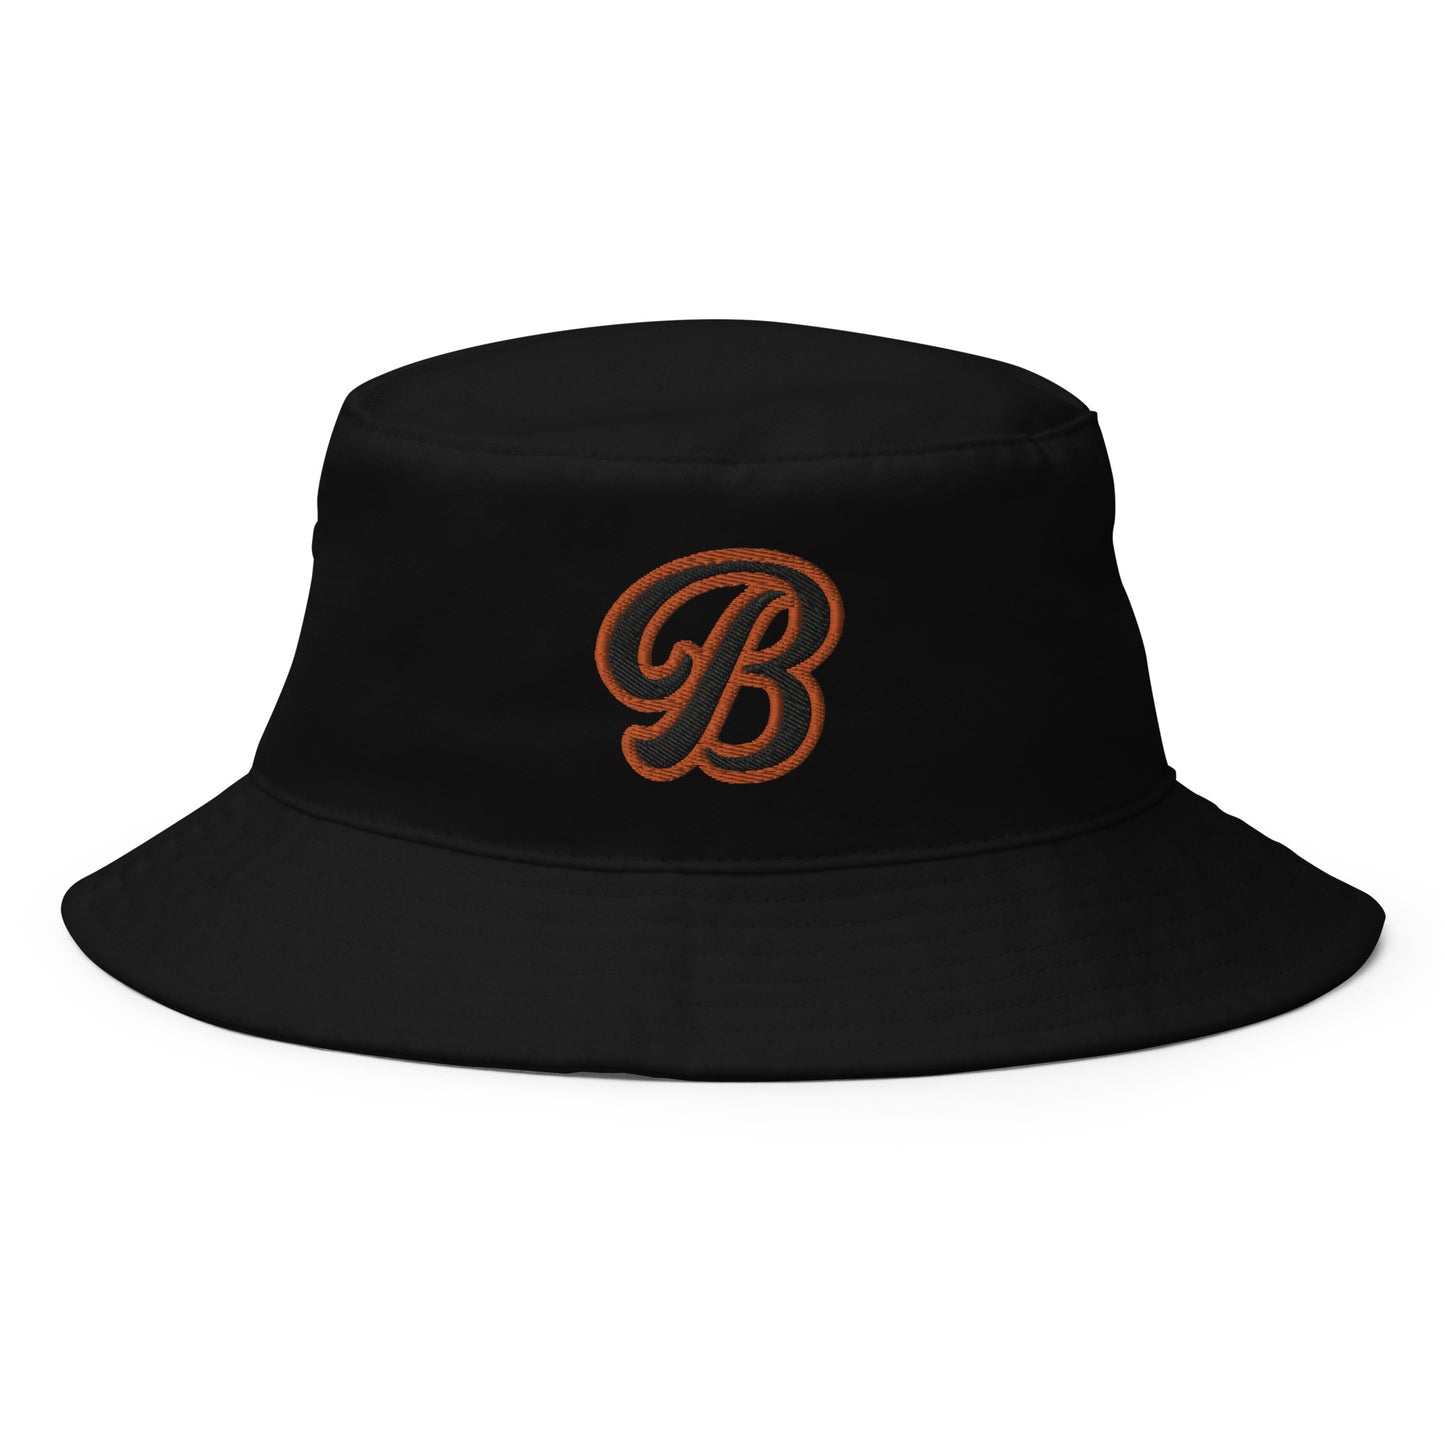 WBLHSB Vintage B Bucket Hat